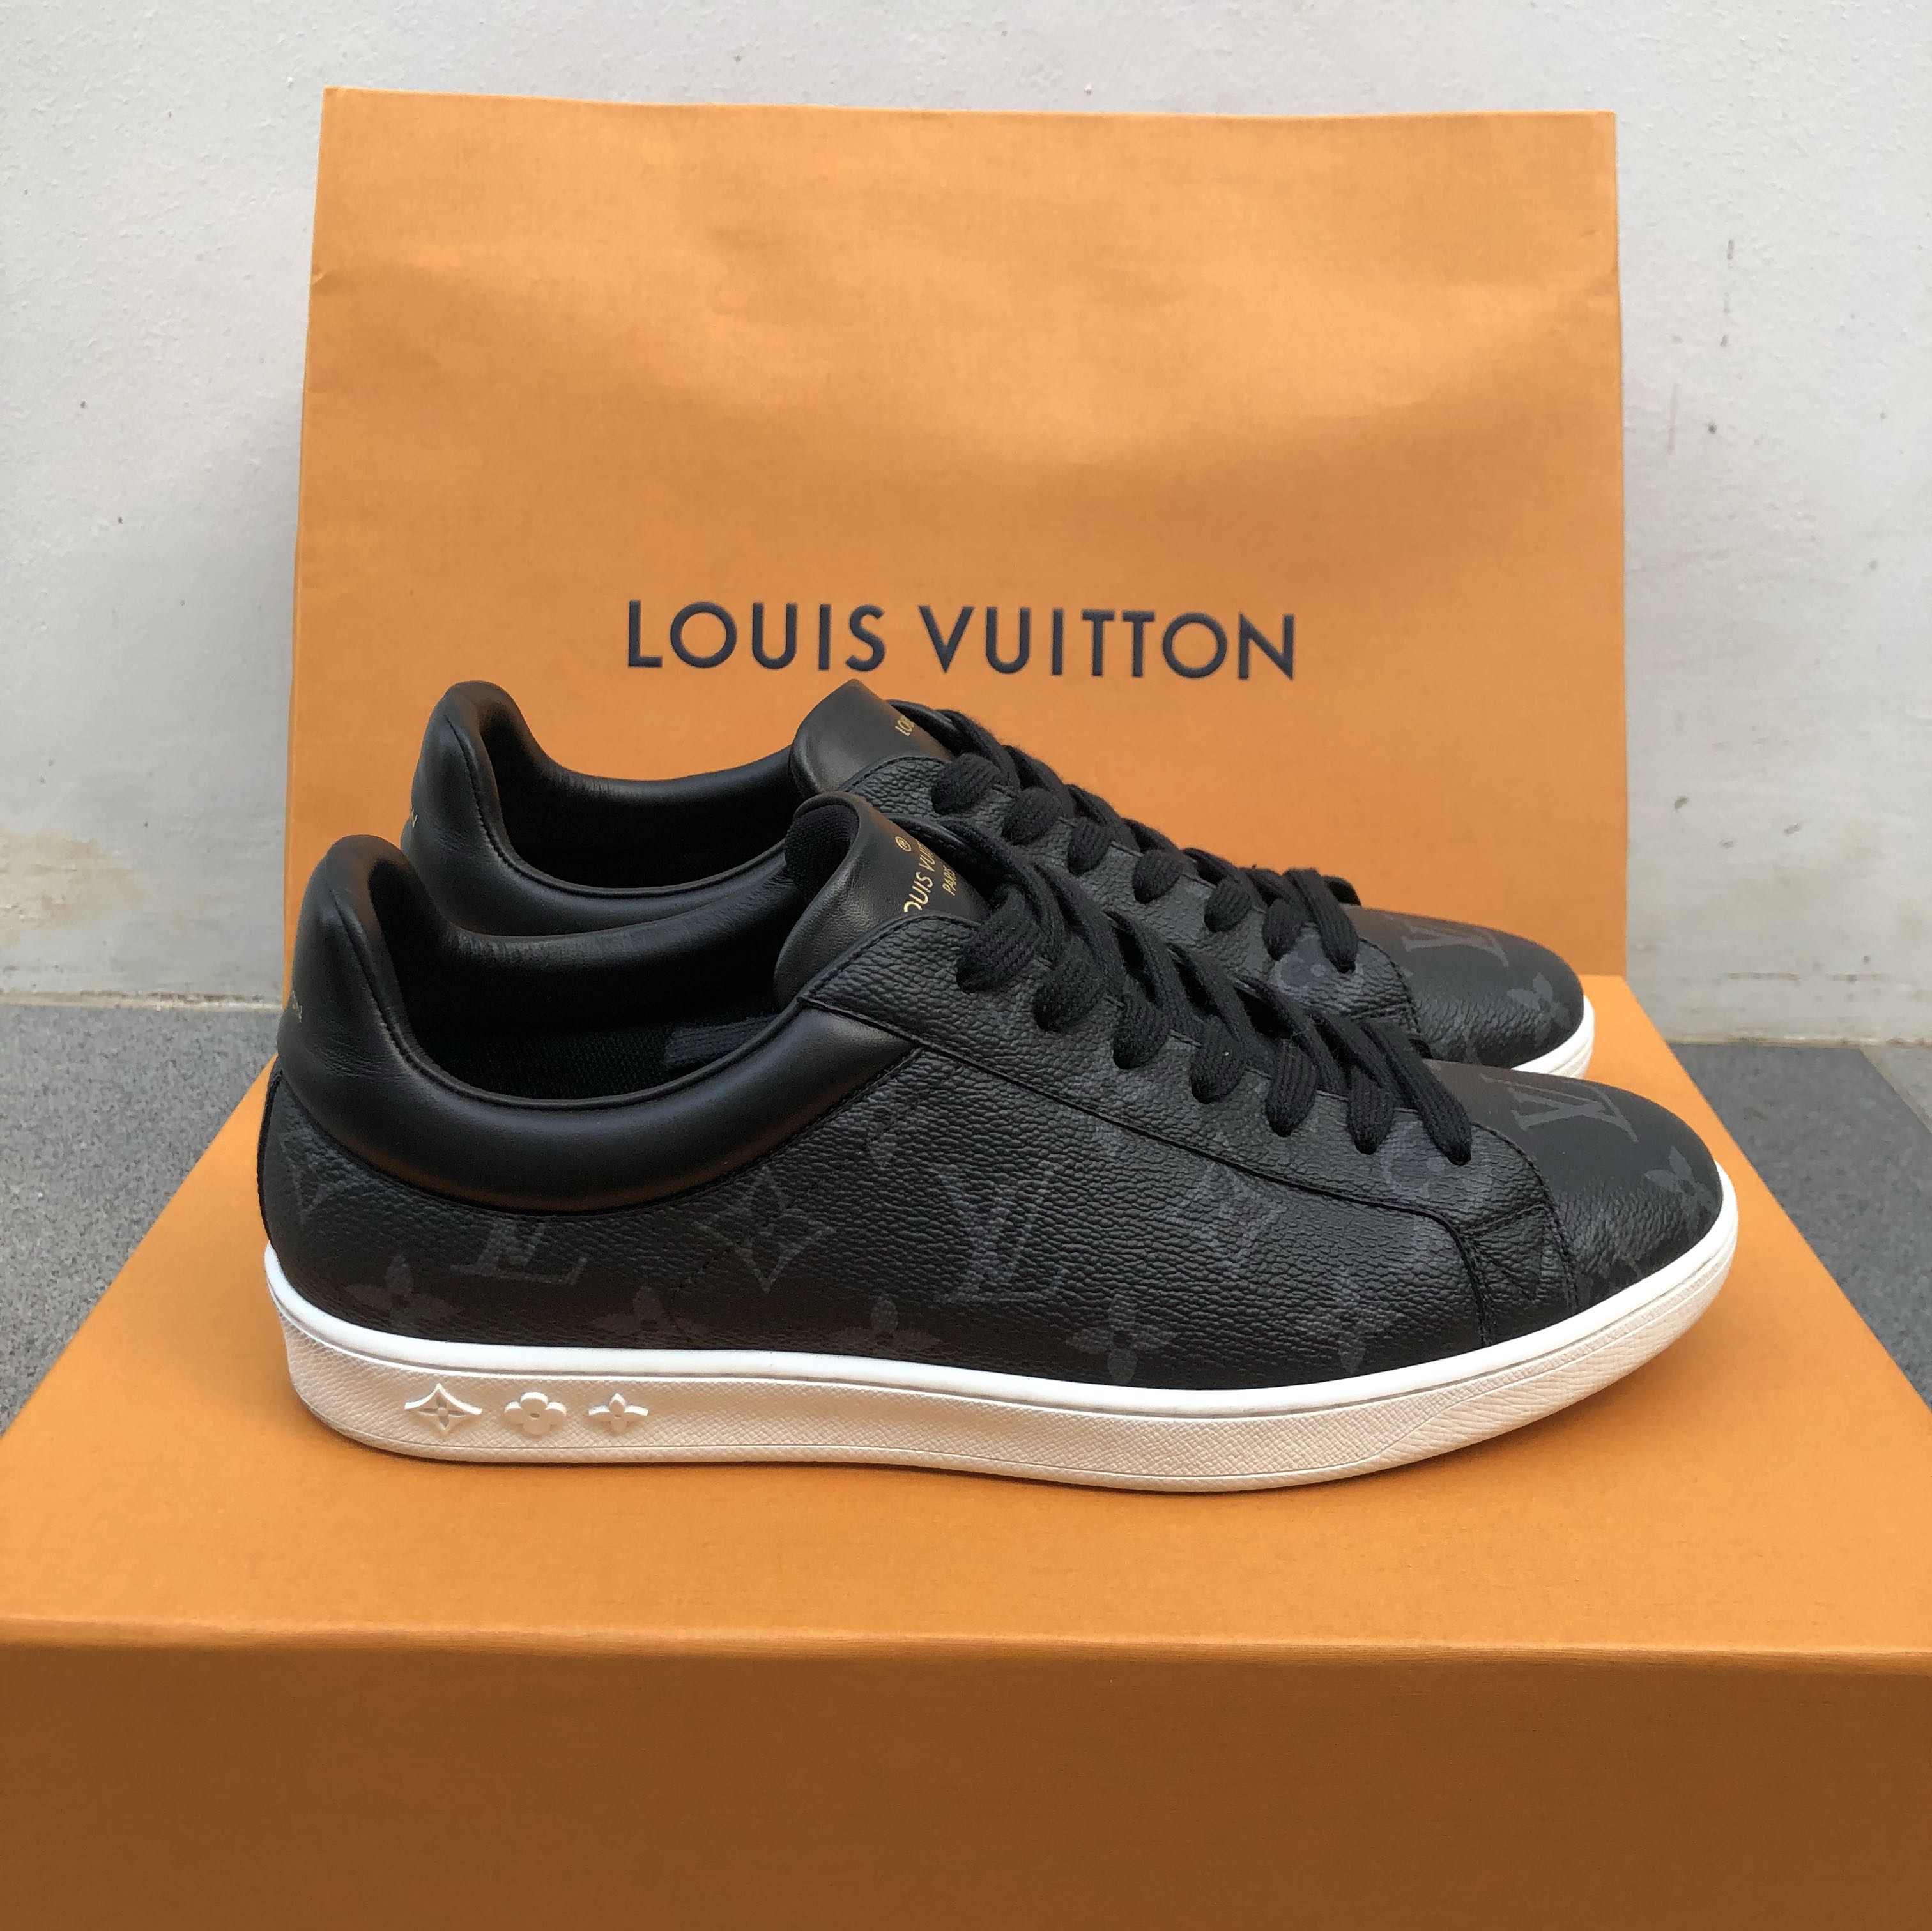 LOUIS VUITTON - luxembourg sneaker